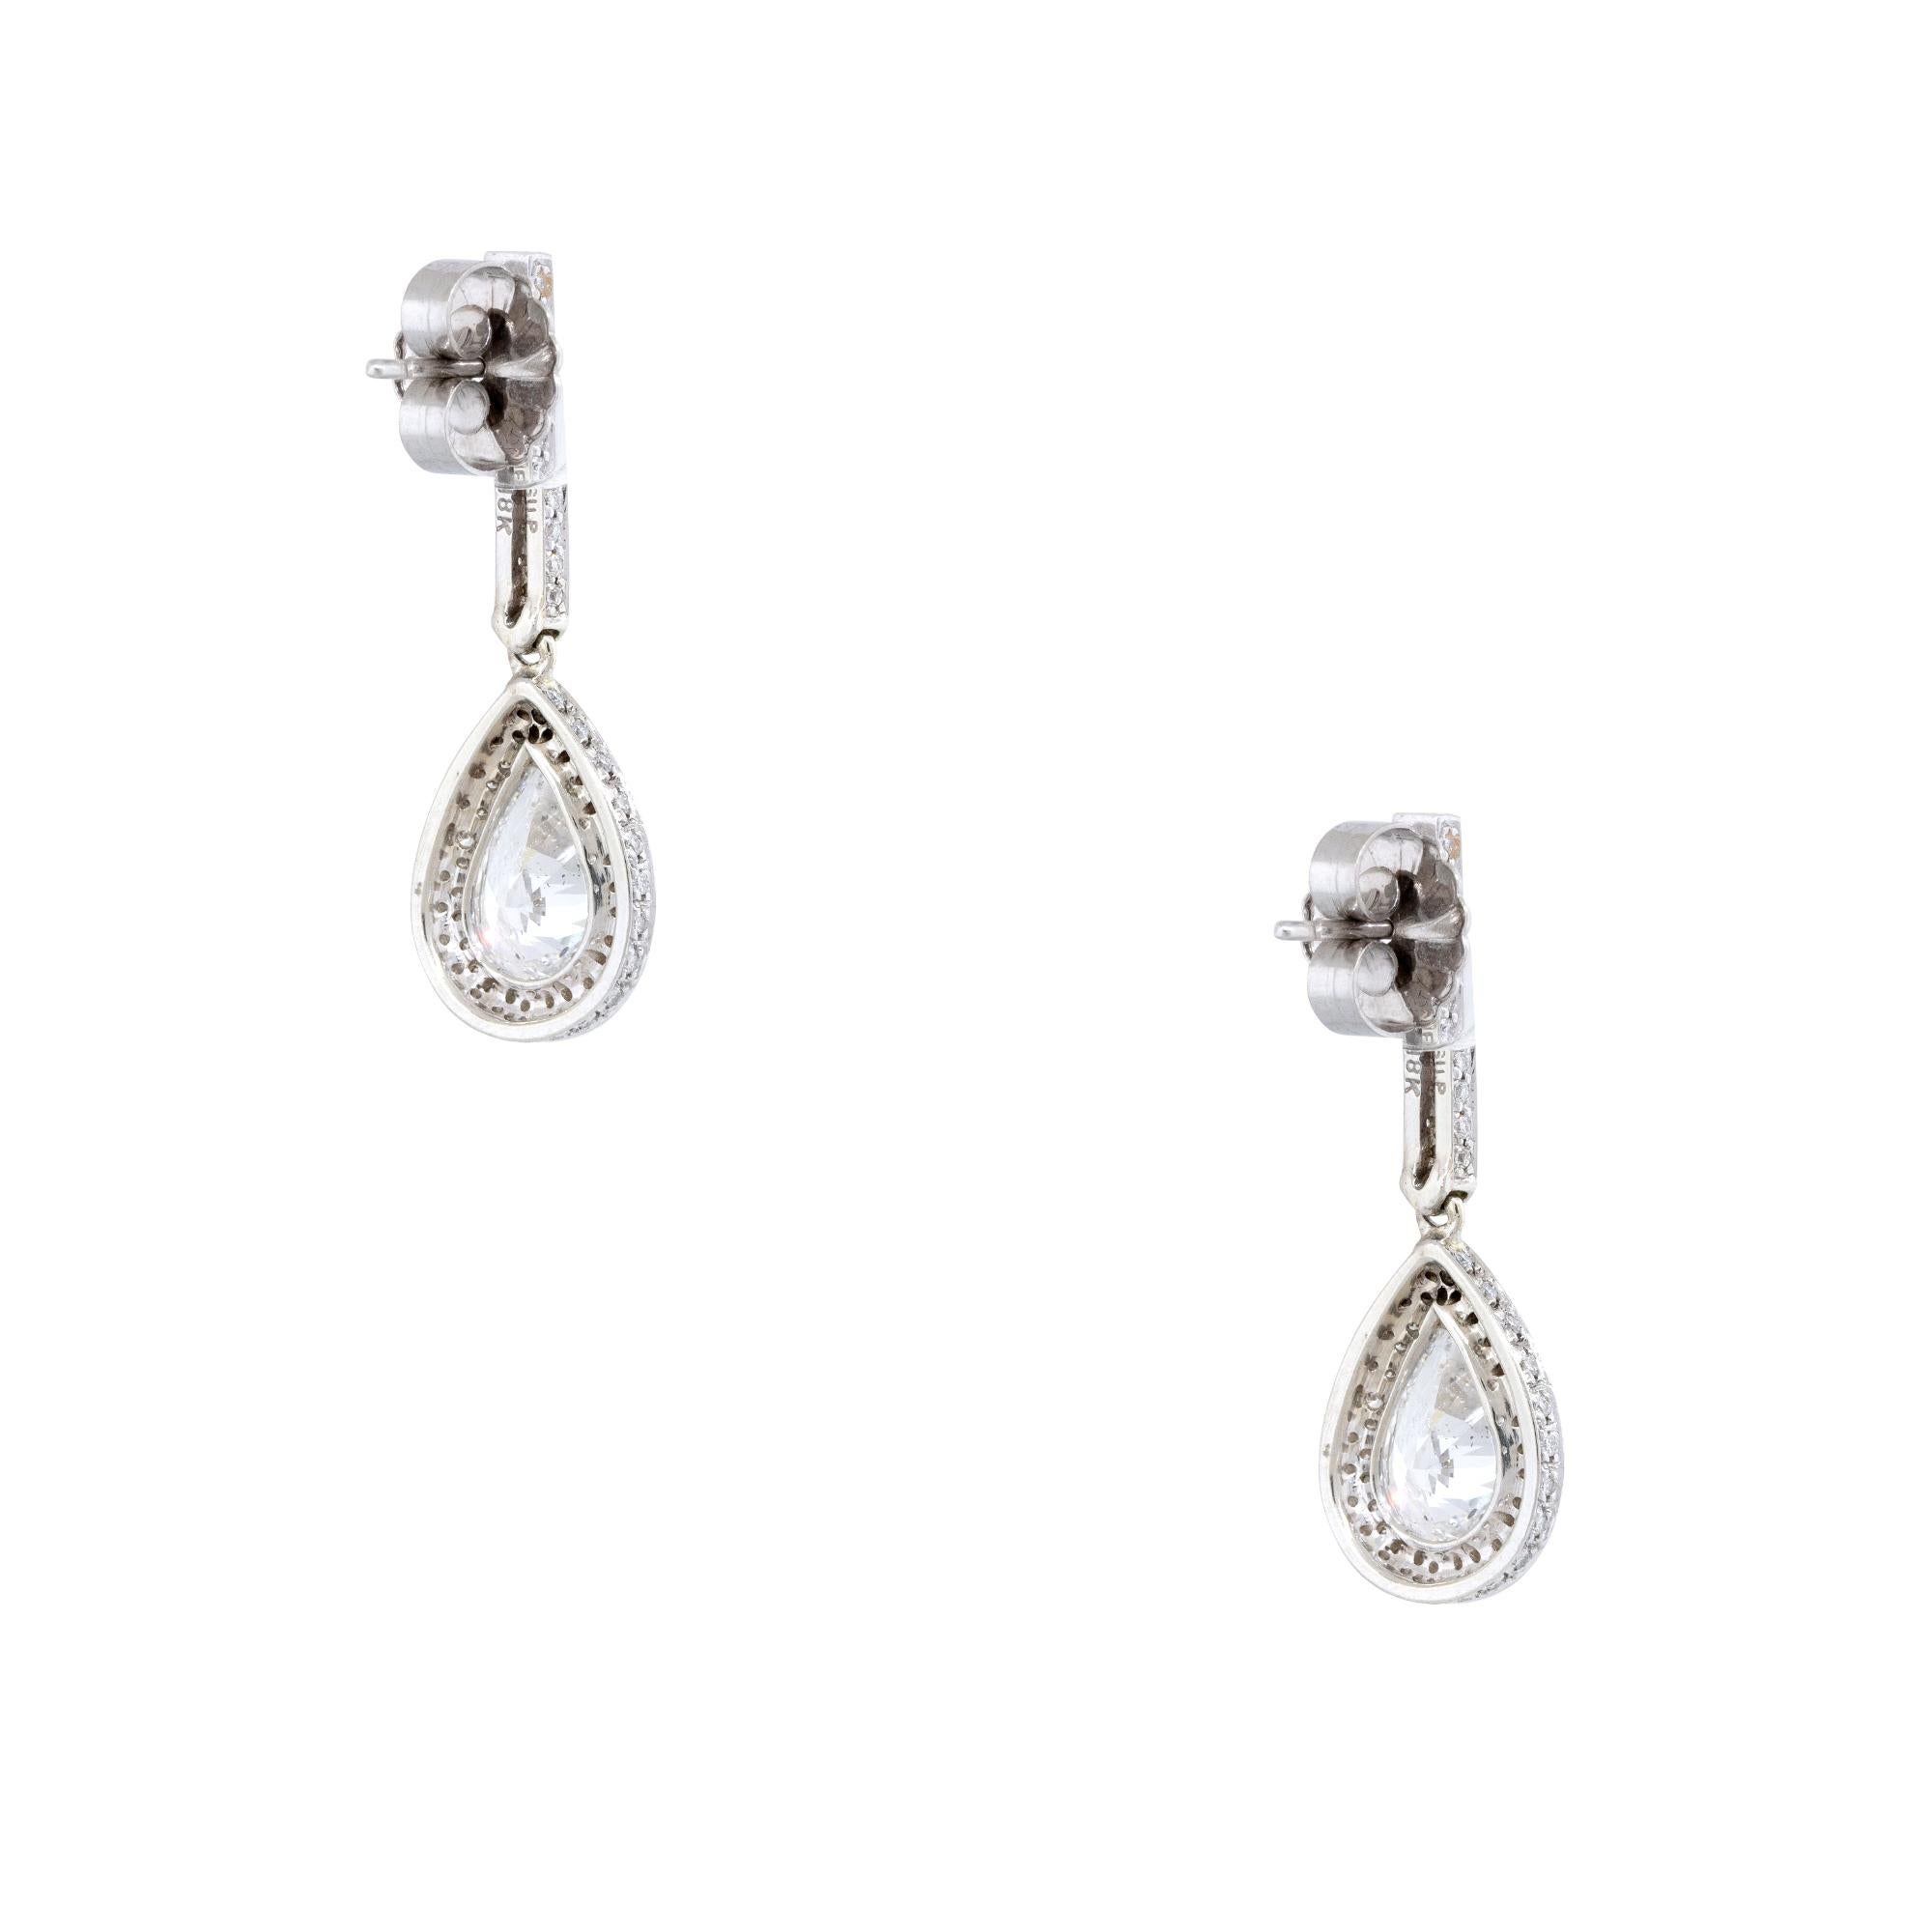 18k White Gold 4.76ctw Pear Shape Halo Drop Earrings
Material	18k White Gold
Diamond Details, Main diamond details: 1, GIA graded, 2 carat, pear shape diamond. F color, SI2 clarity. 1, EGL graded, 2 carat, pear shape diamond. D color, SI2